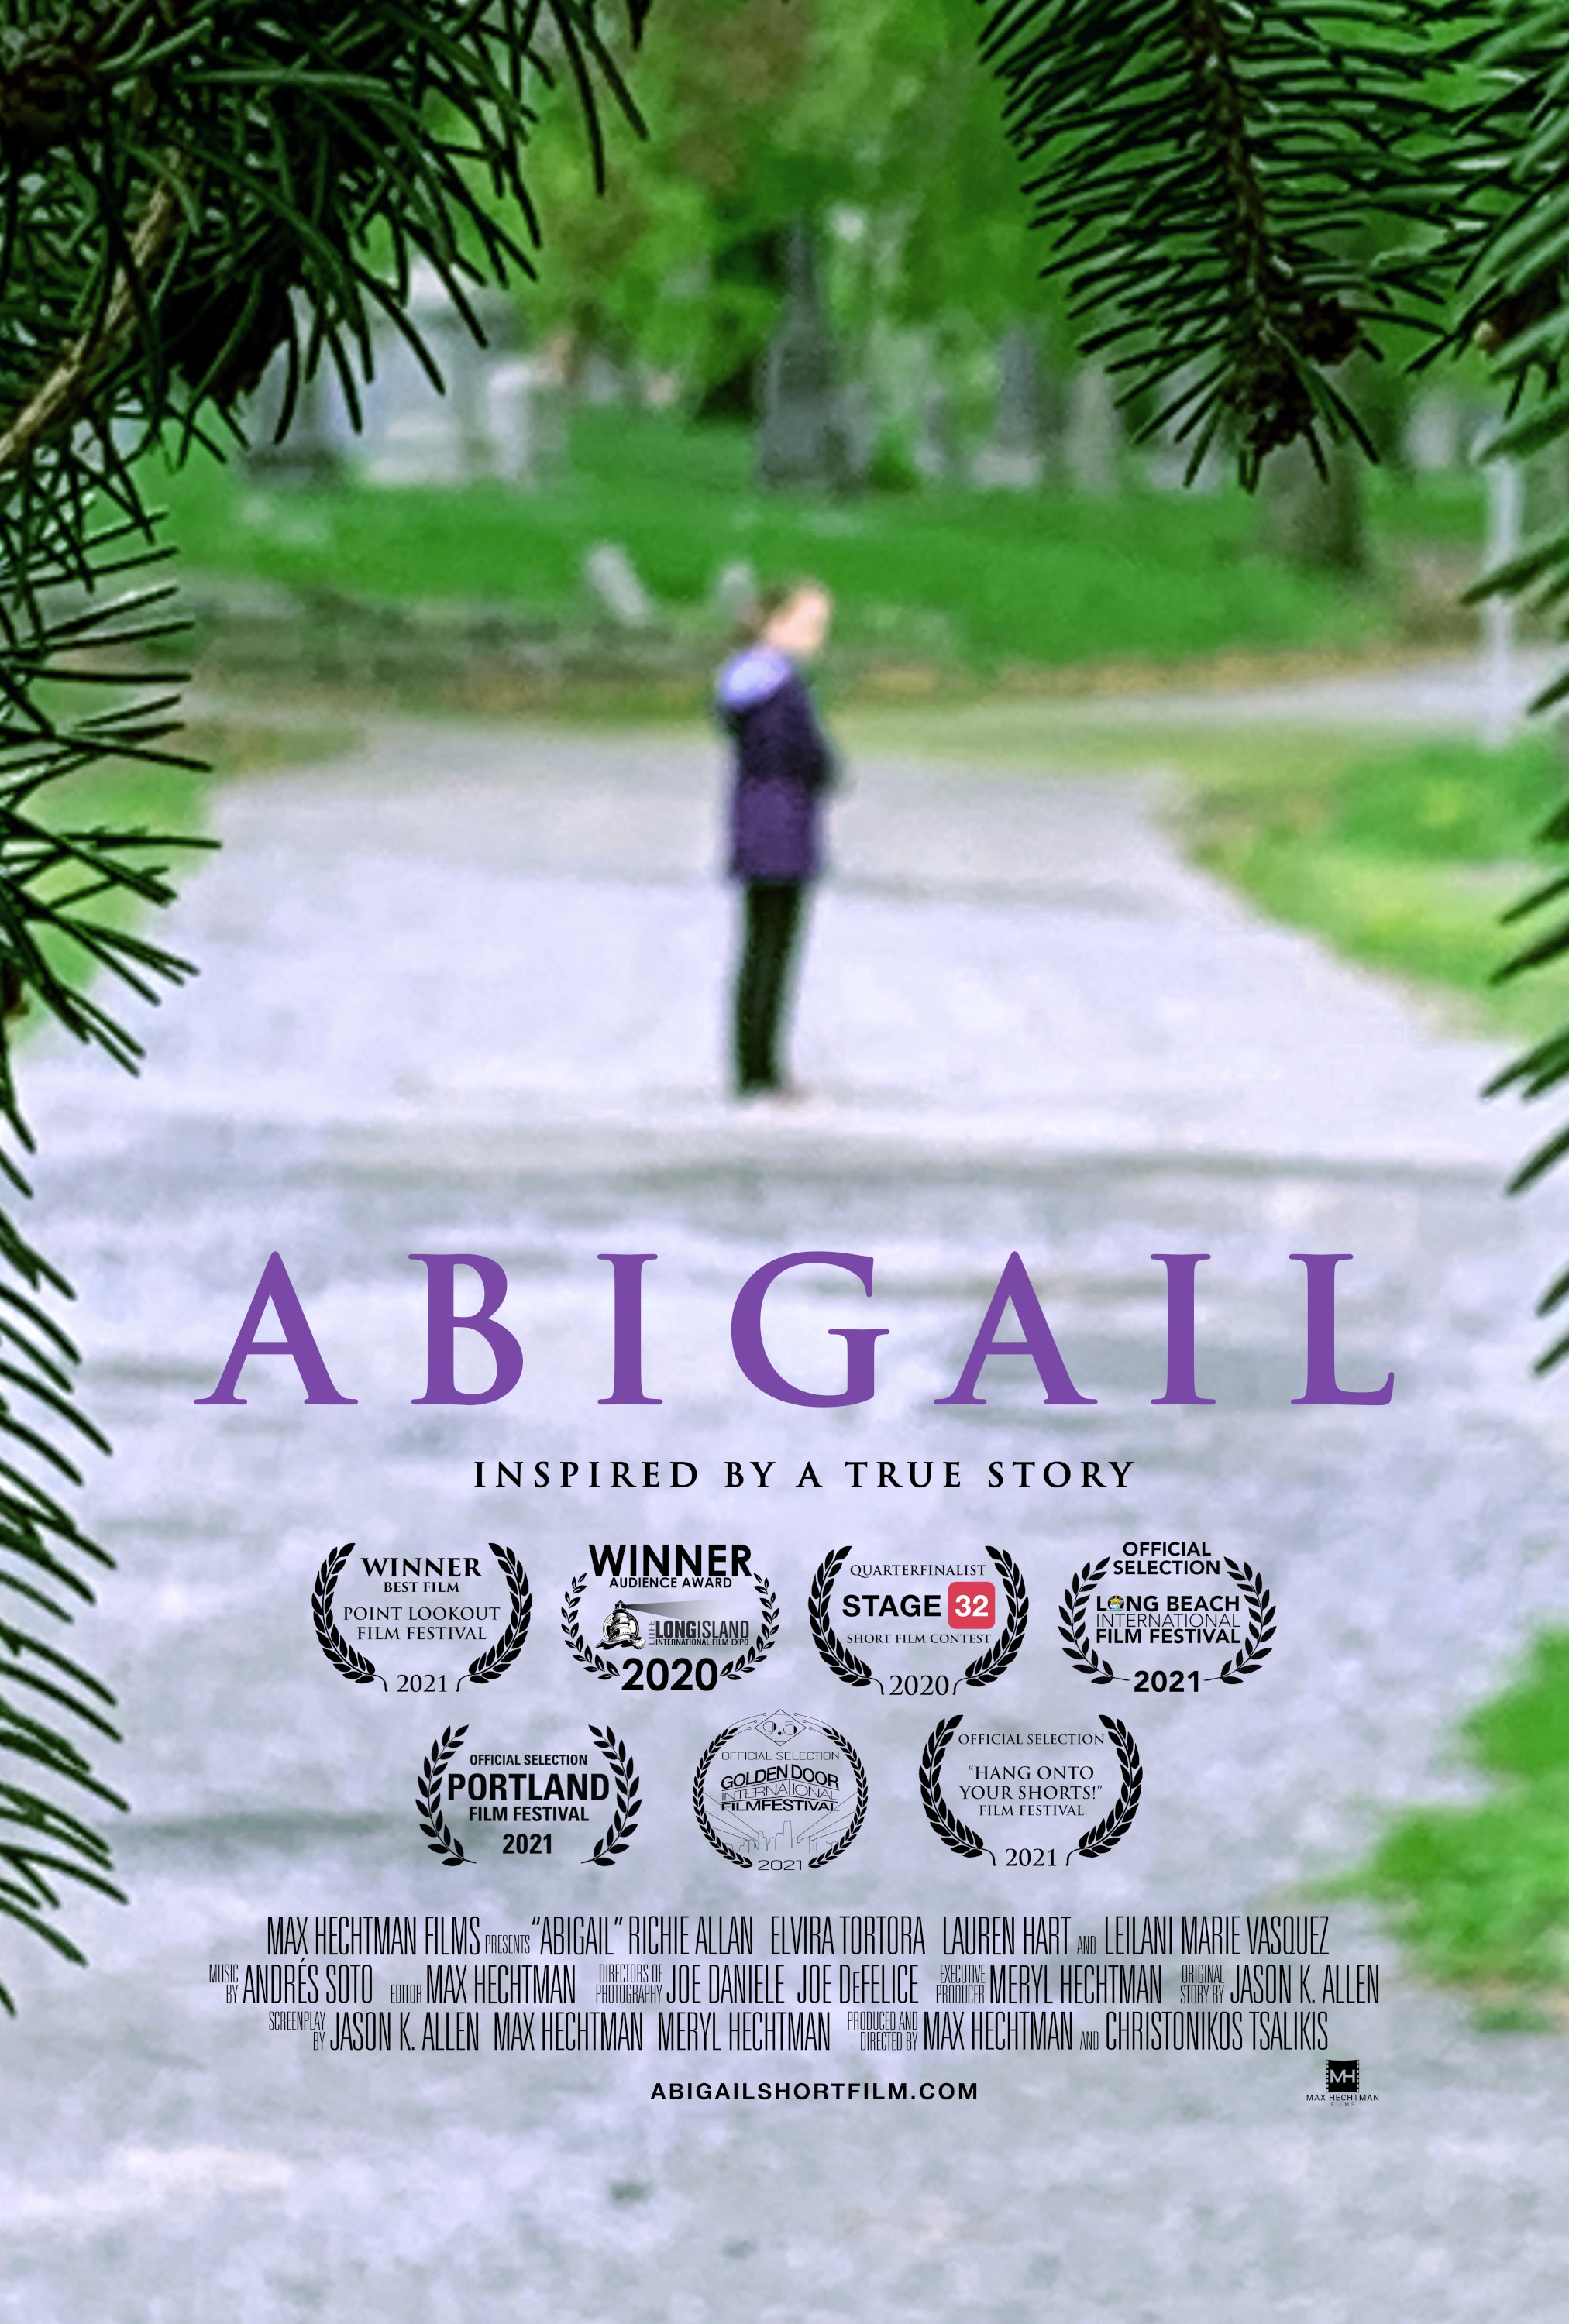 Mega Sized Movie Poster Image for Abigail